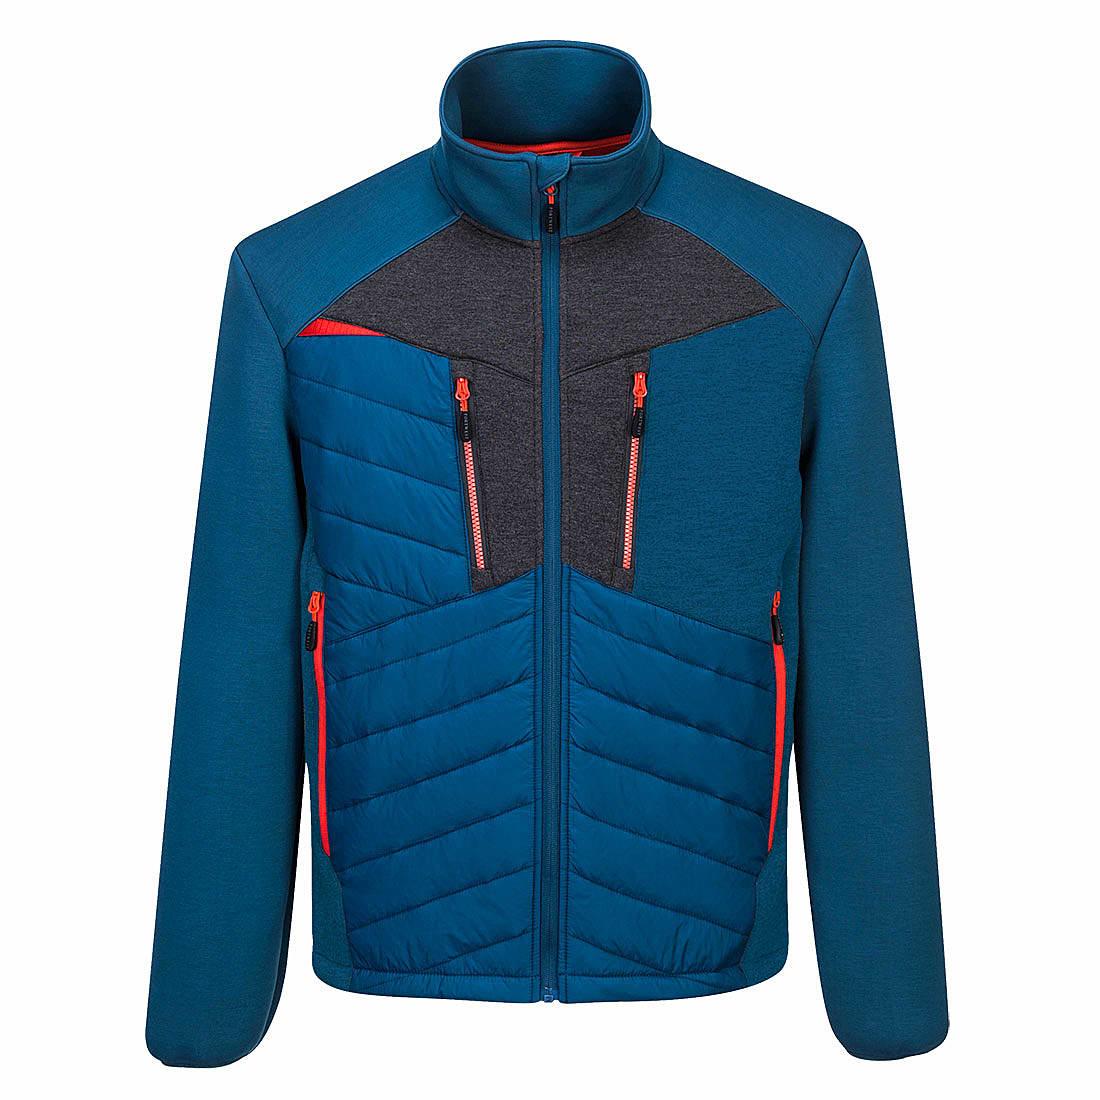 Portwest DX4 Baffle Jacket in Metro Blue (Product Code: DX471)